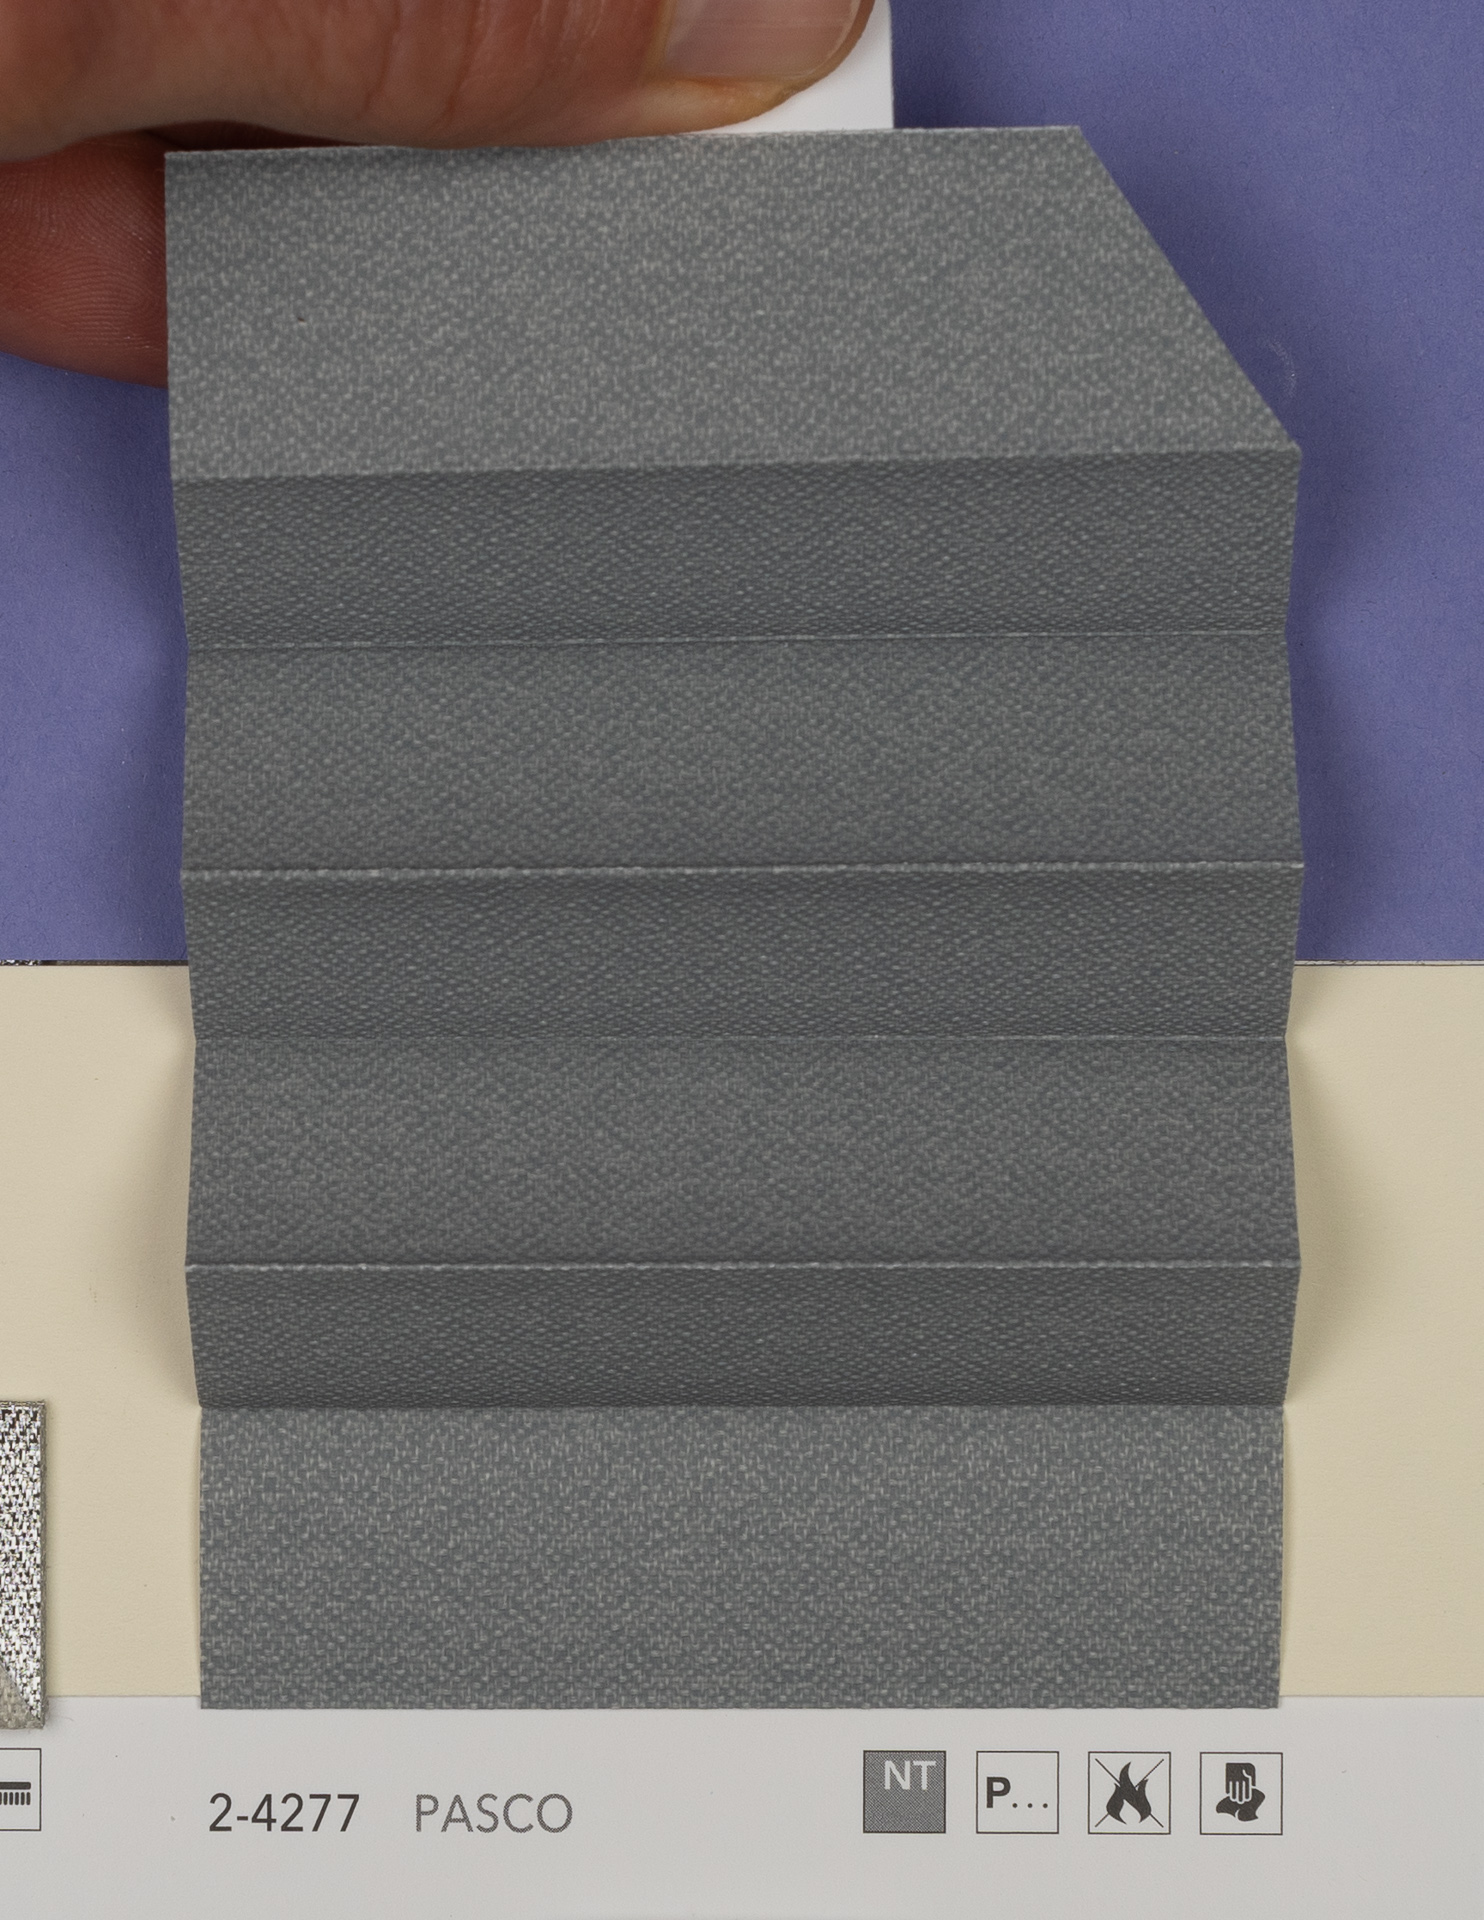 MHZ Plissee Stoff Muster aus der Farbkarte "19 Flame Retardant" | Material: 100 % PES